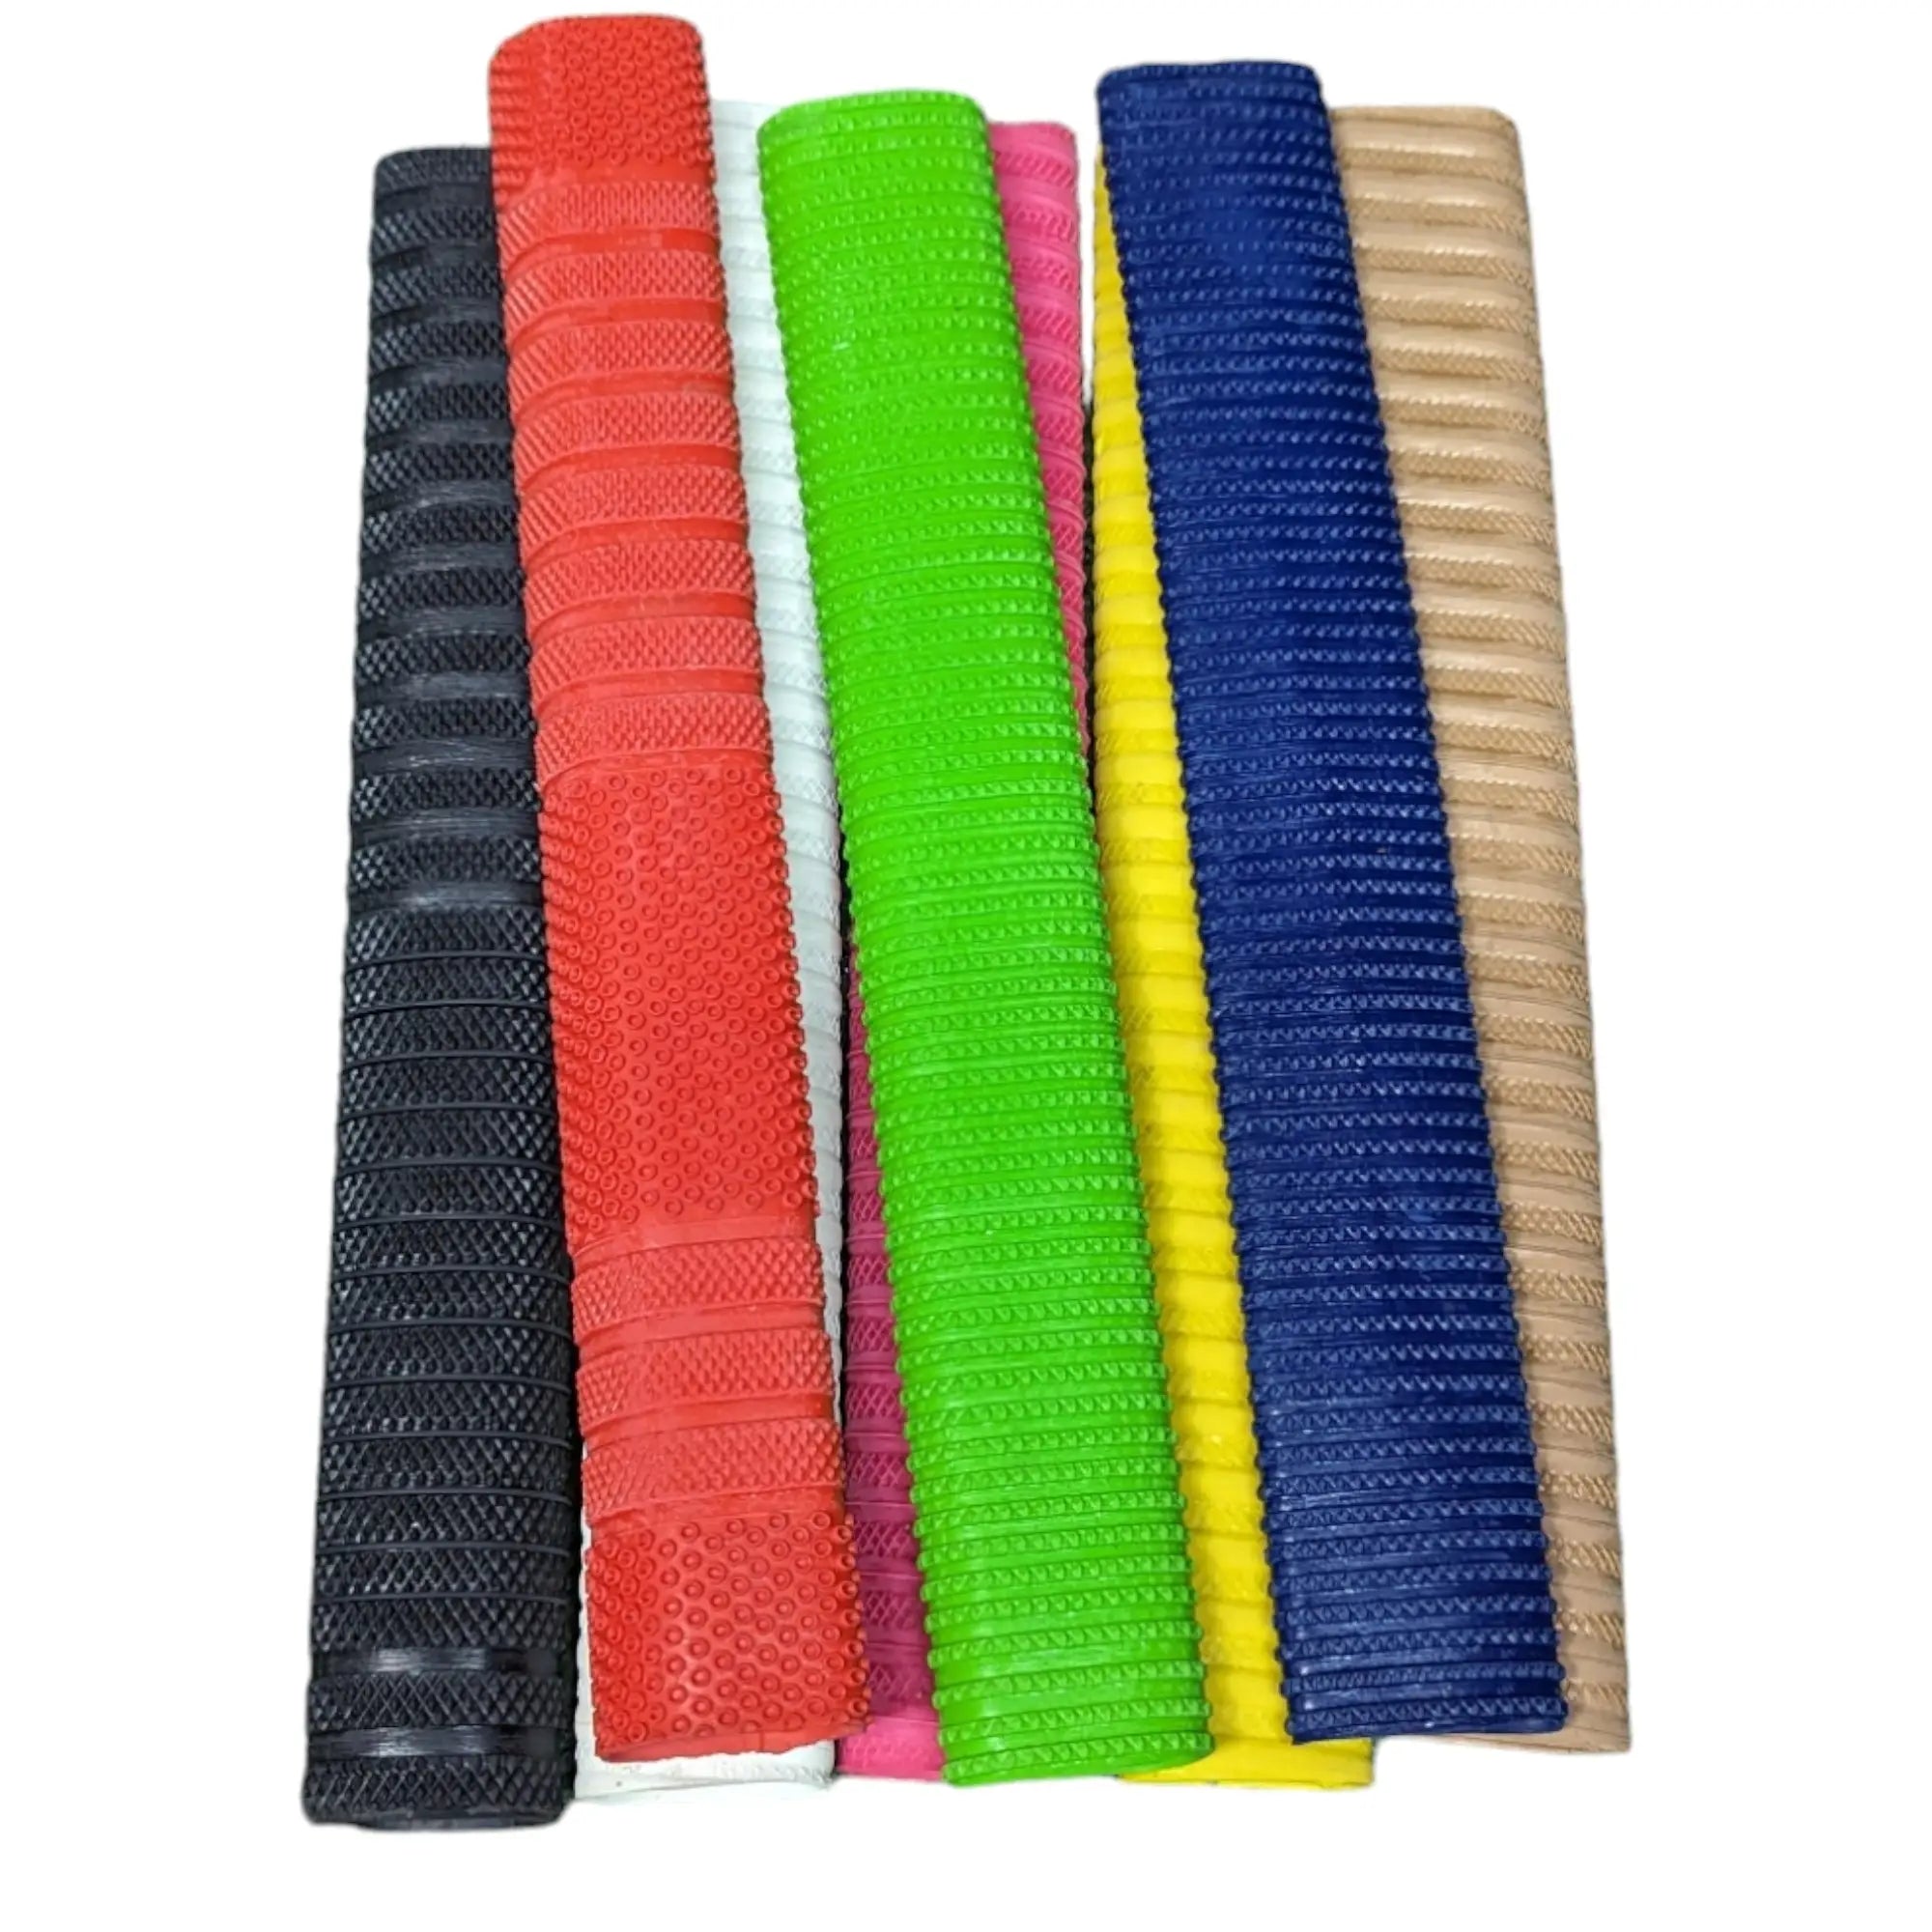 Bratla Cricket Bat Grips: Pack of 5 Multi-Color Options - Cricket Bat Grip